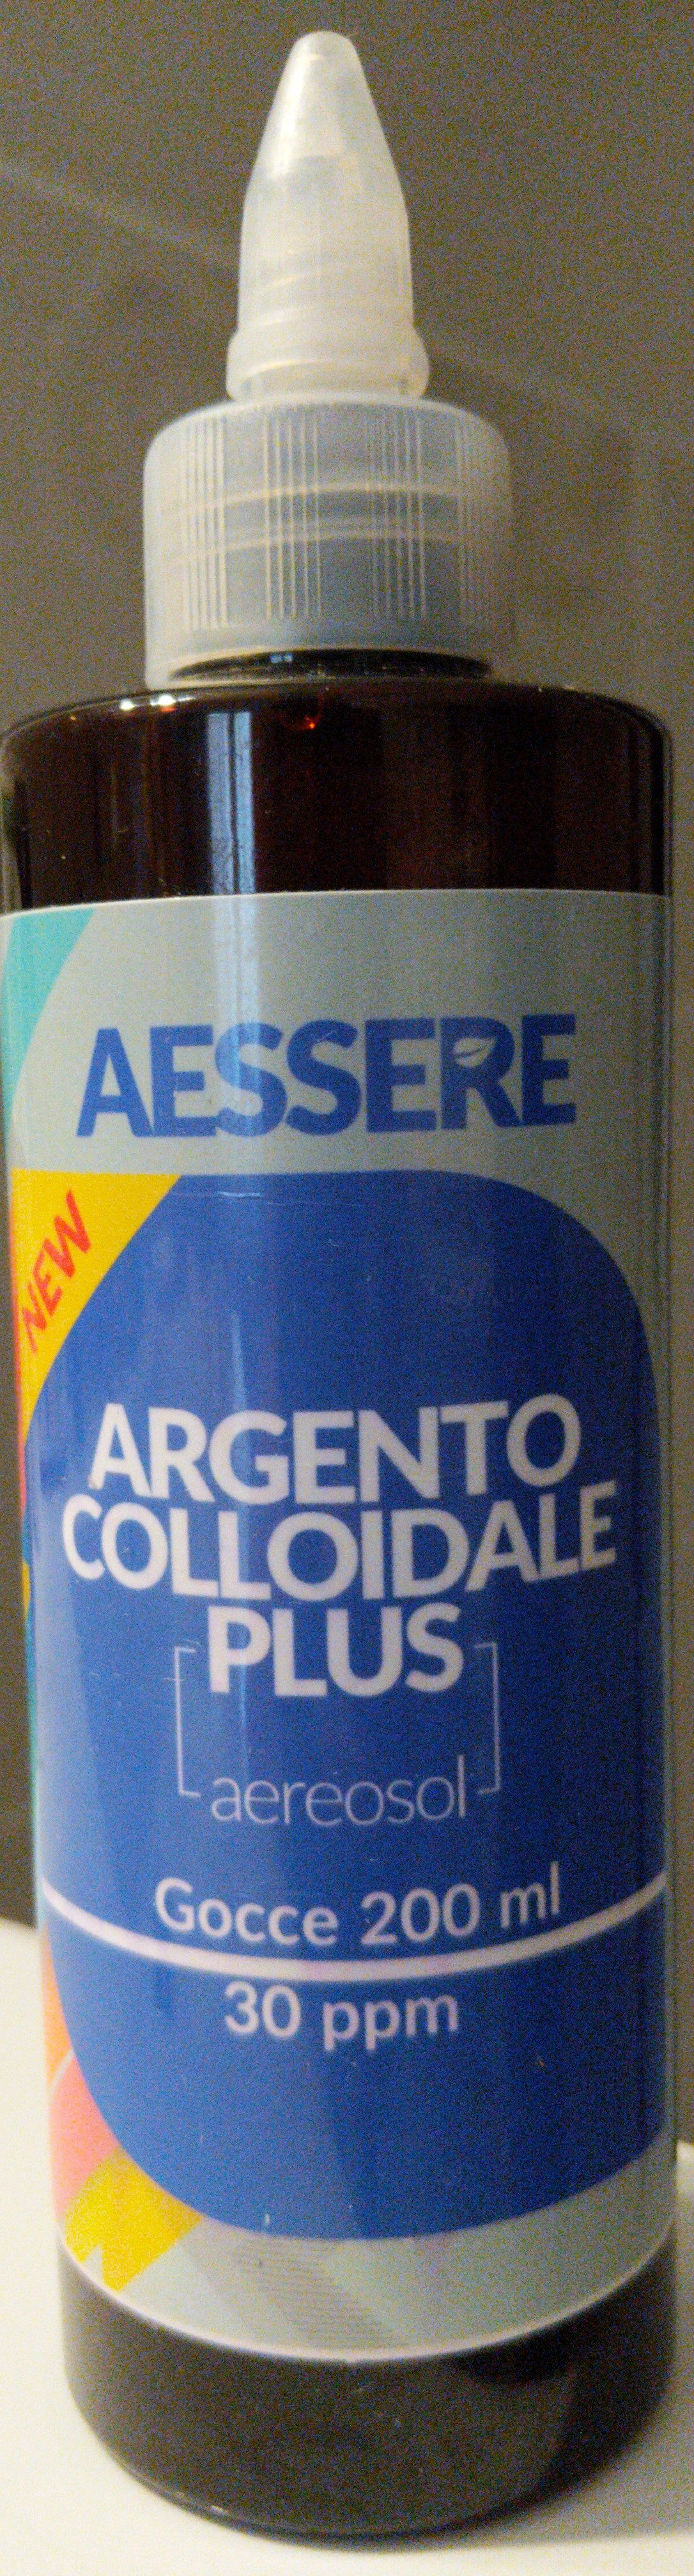 Argento Colloidale Plus aerosol - 製品 - it